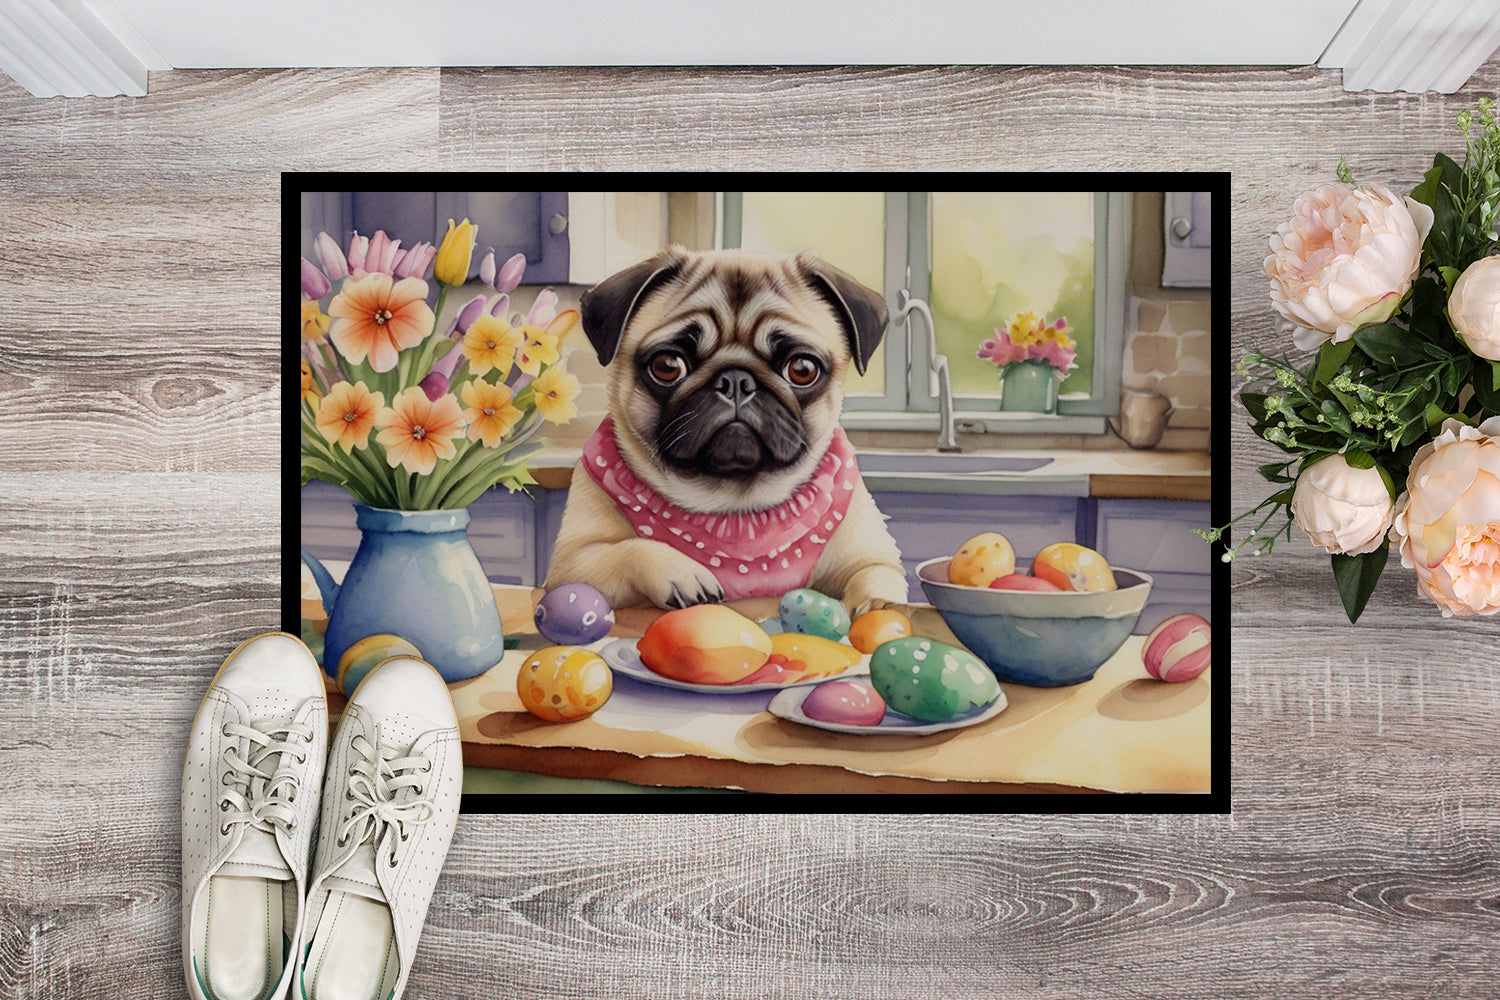 Buy this Decorating Easter Pug Doormat